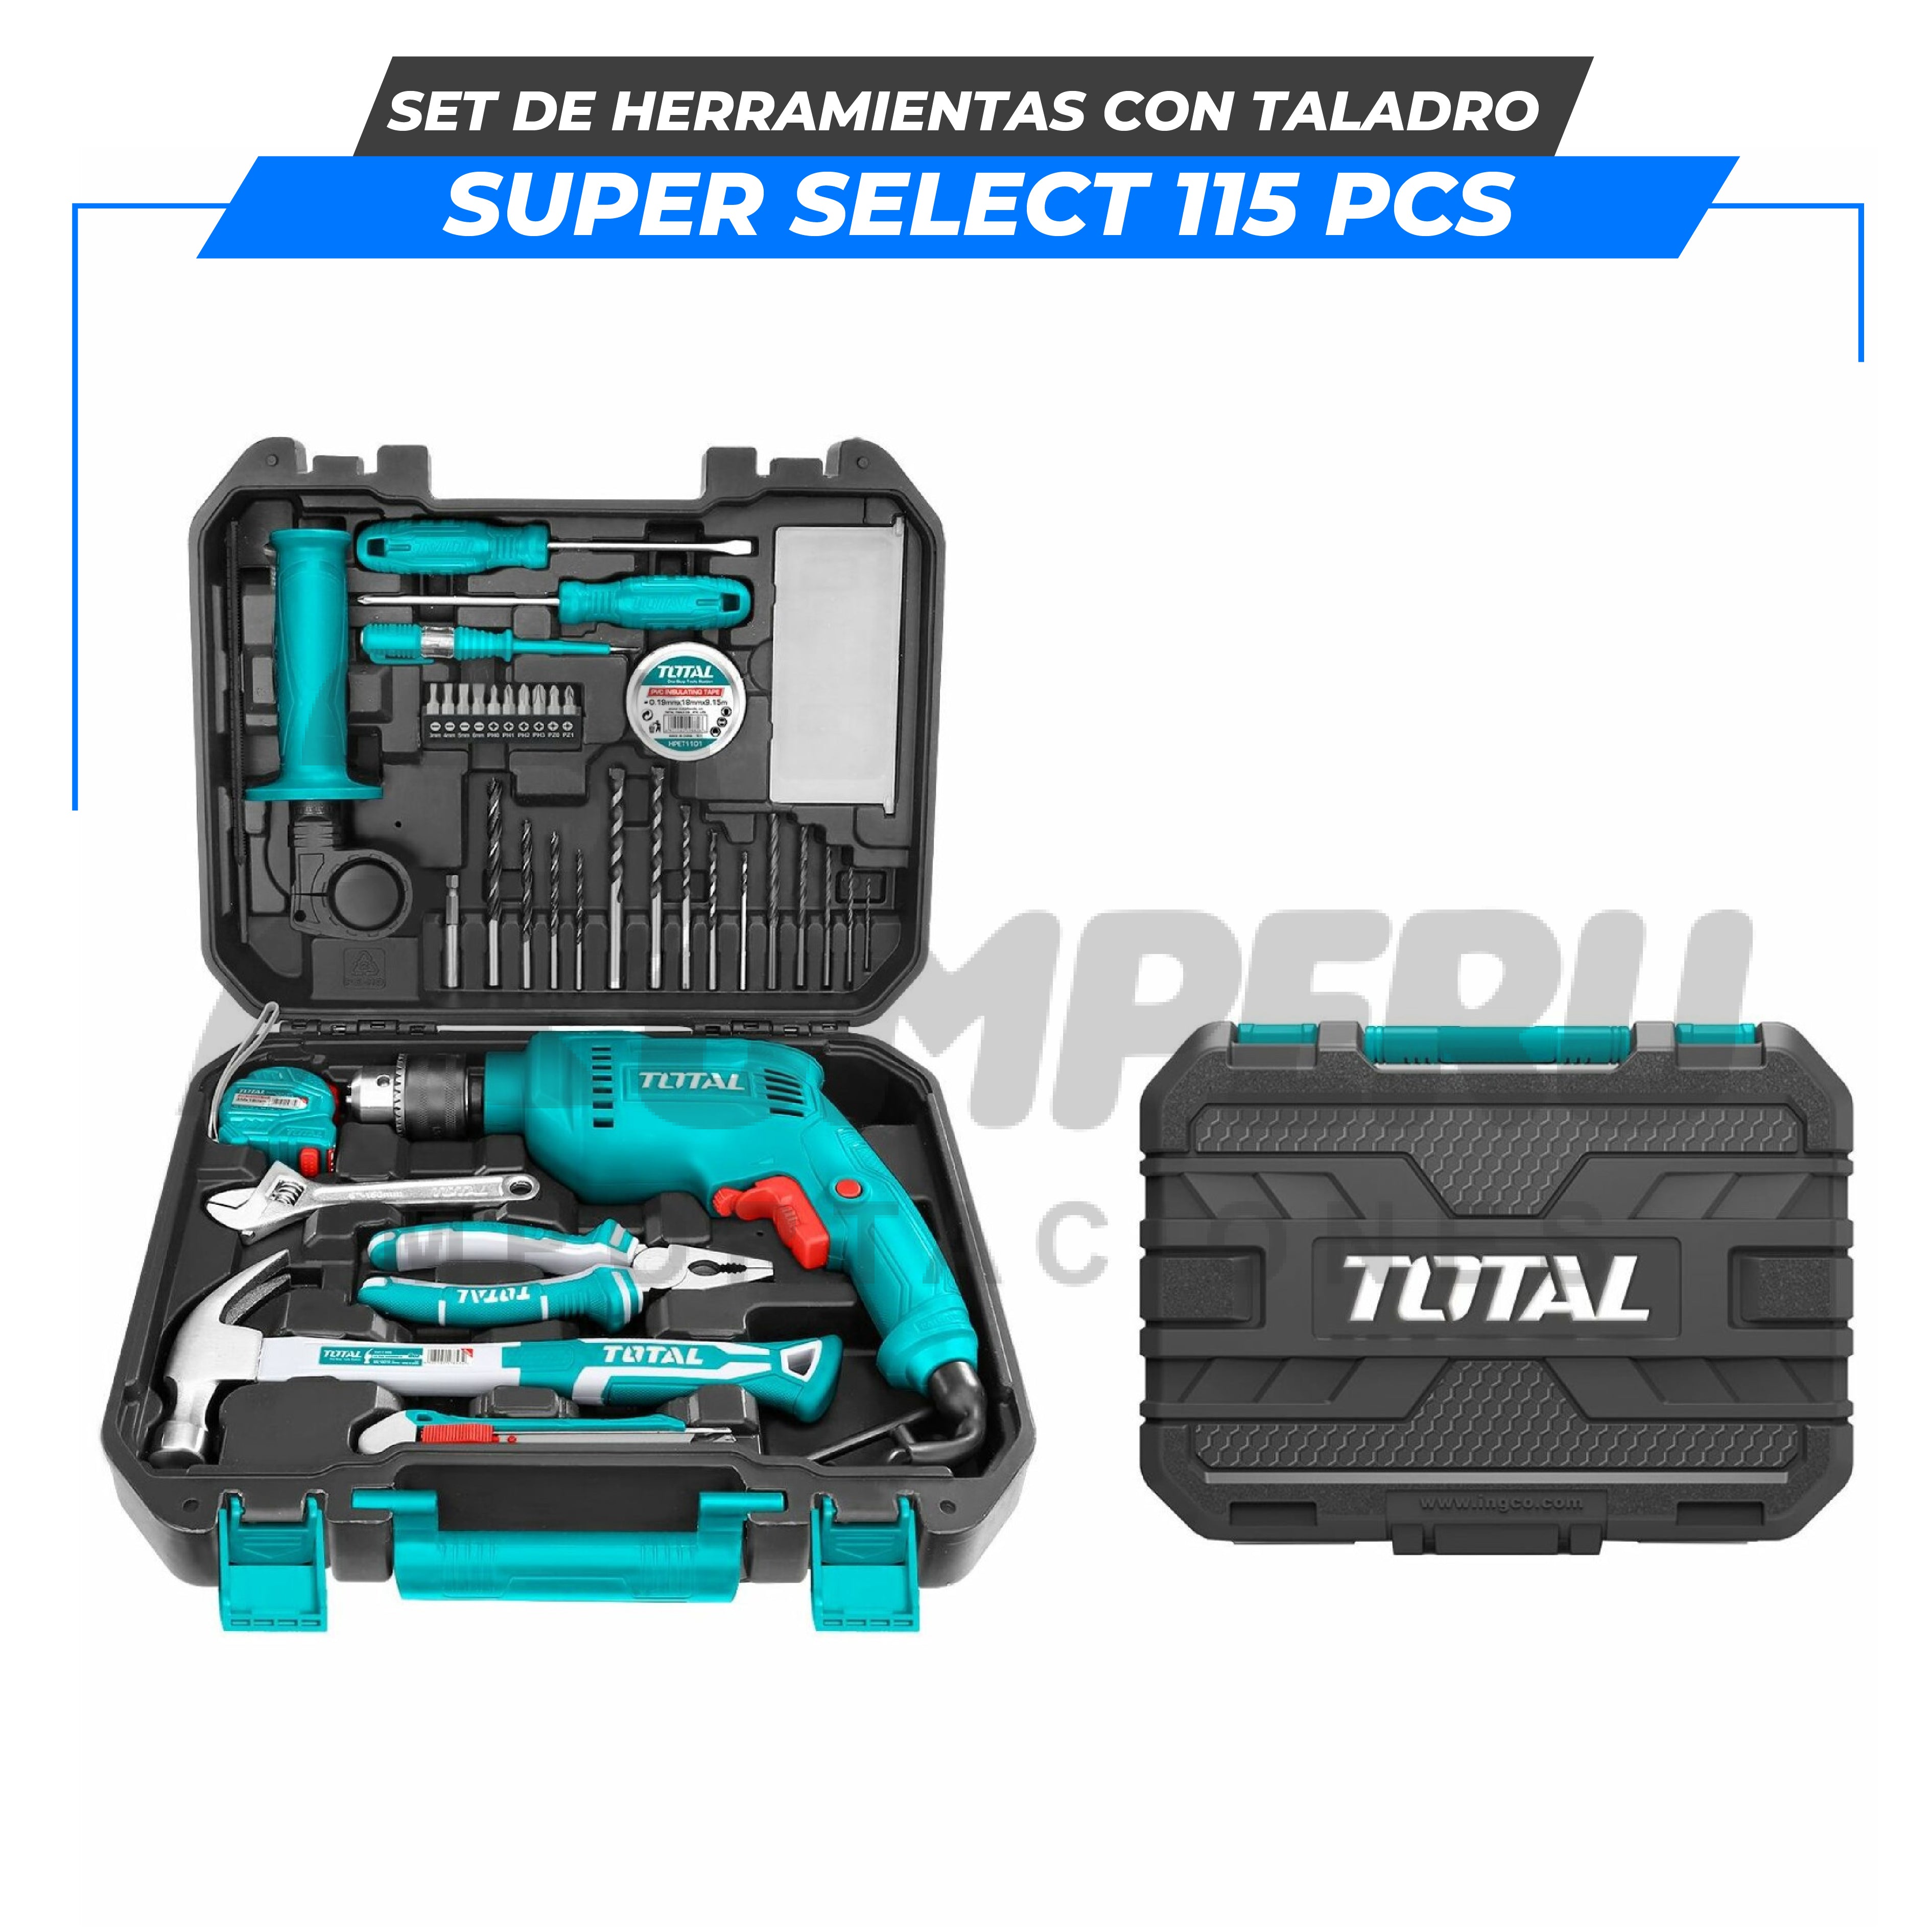 Set de herramientas con Taladro 115 Pcs SUPER SELECT